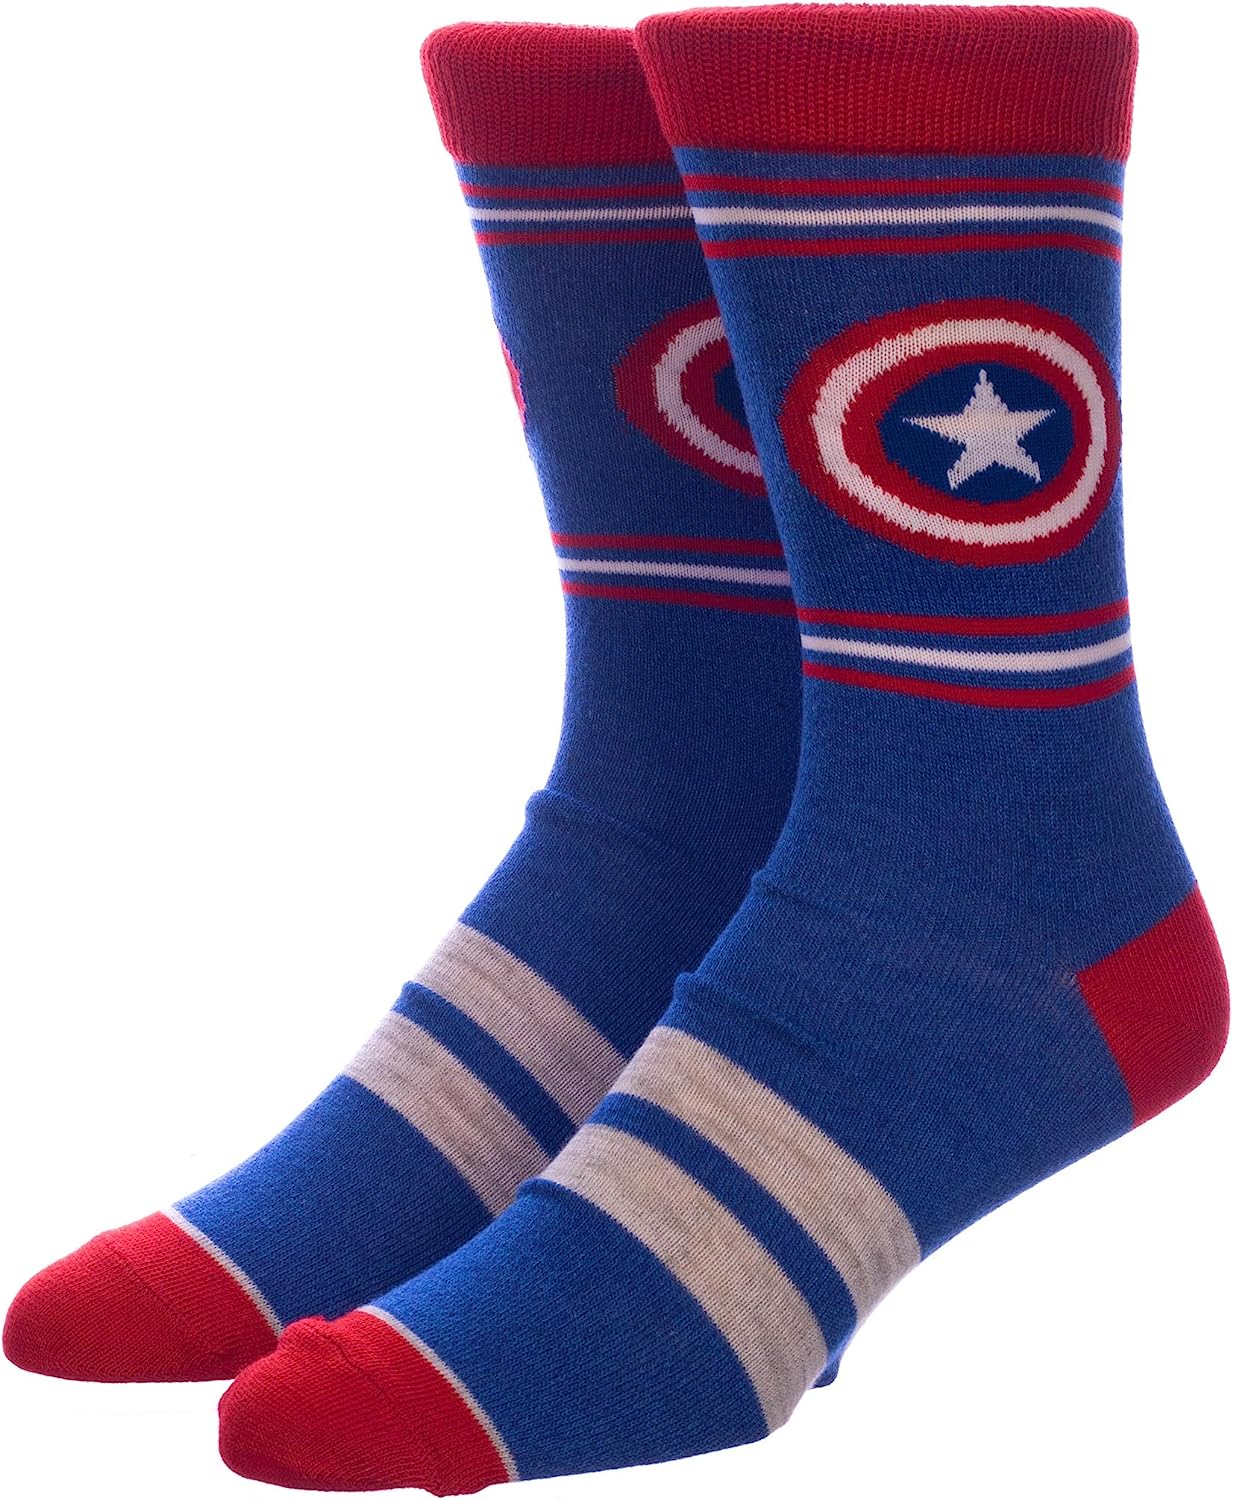 Bioworld Marvel Captain America Comic Character Crew Socks (Pack of 5),10-13,Multi-color